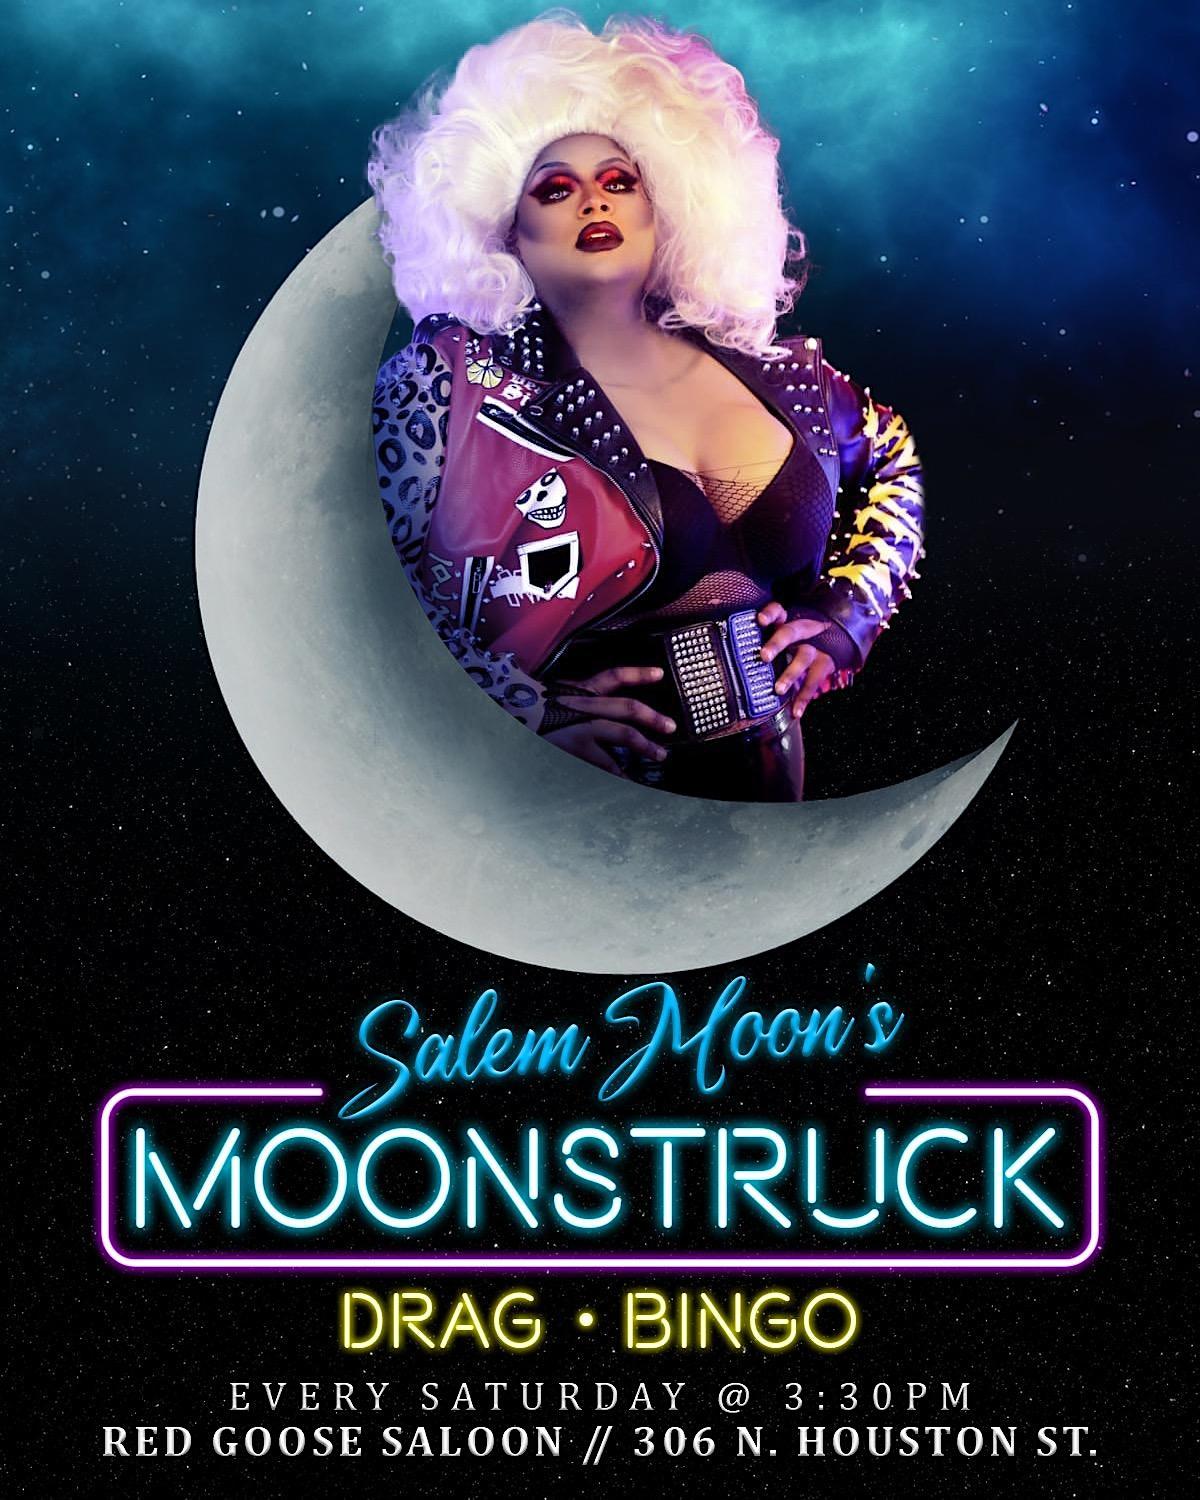 Patrick Mikyles Presents: Moon Struck Drag Bingo hosted by Salem Moon
Sat Oct 22, 3:30 PM - Sat Oct 22, 5:30 PM
in 2 days